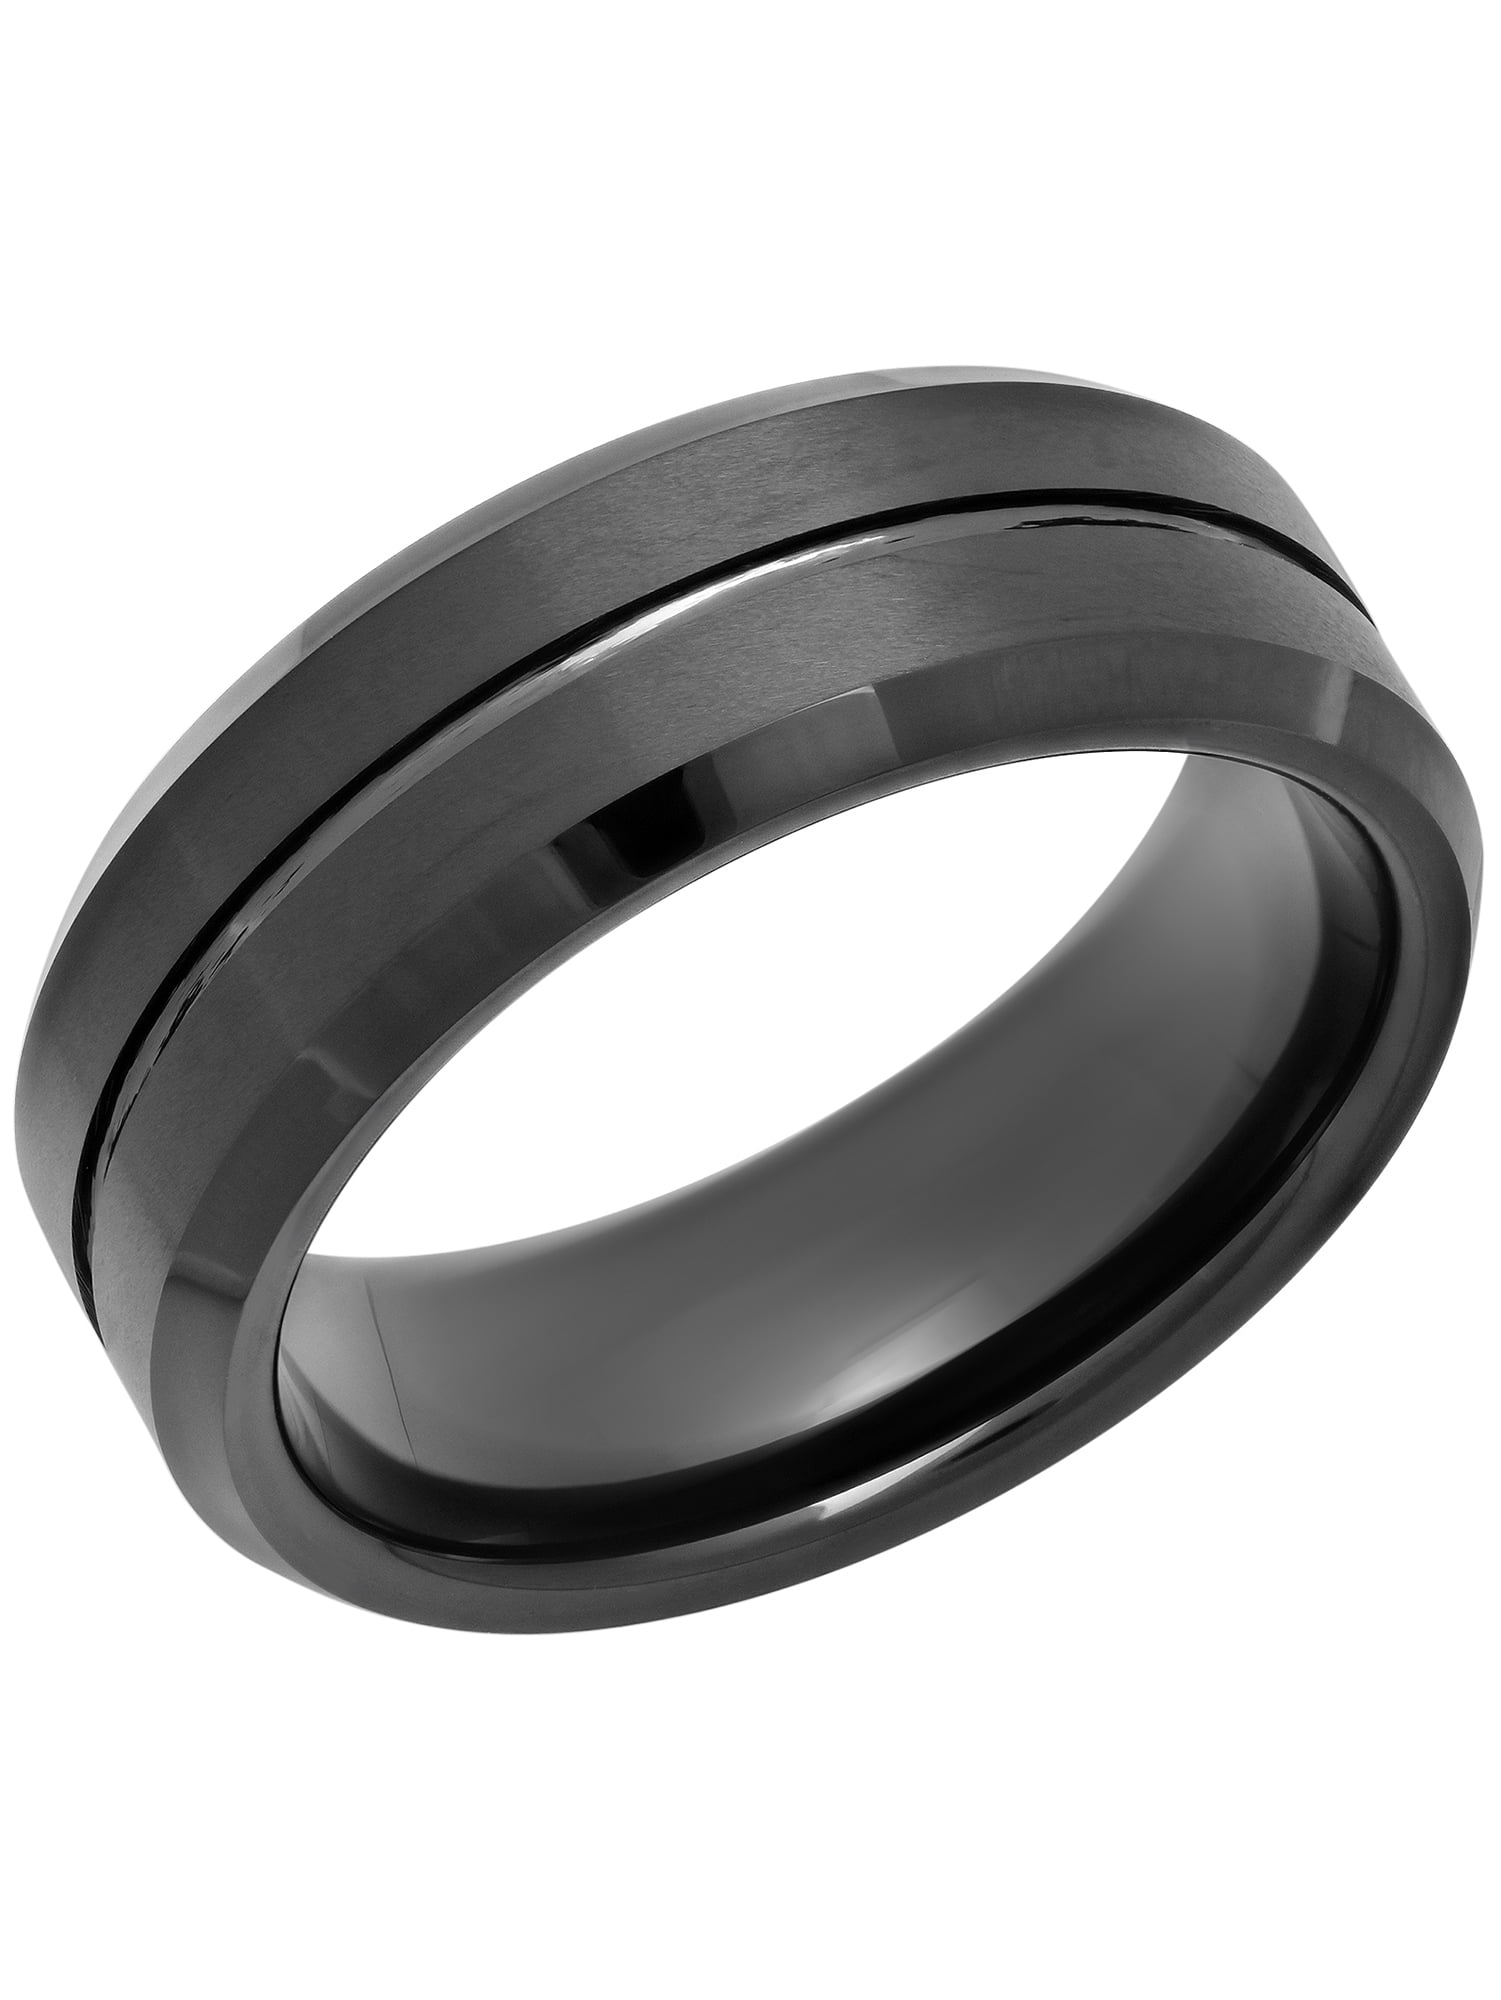 Black Tungsten Rings For Men : Mens BASE RINGS 8 MM Wedding Band Black ...